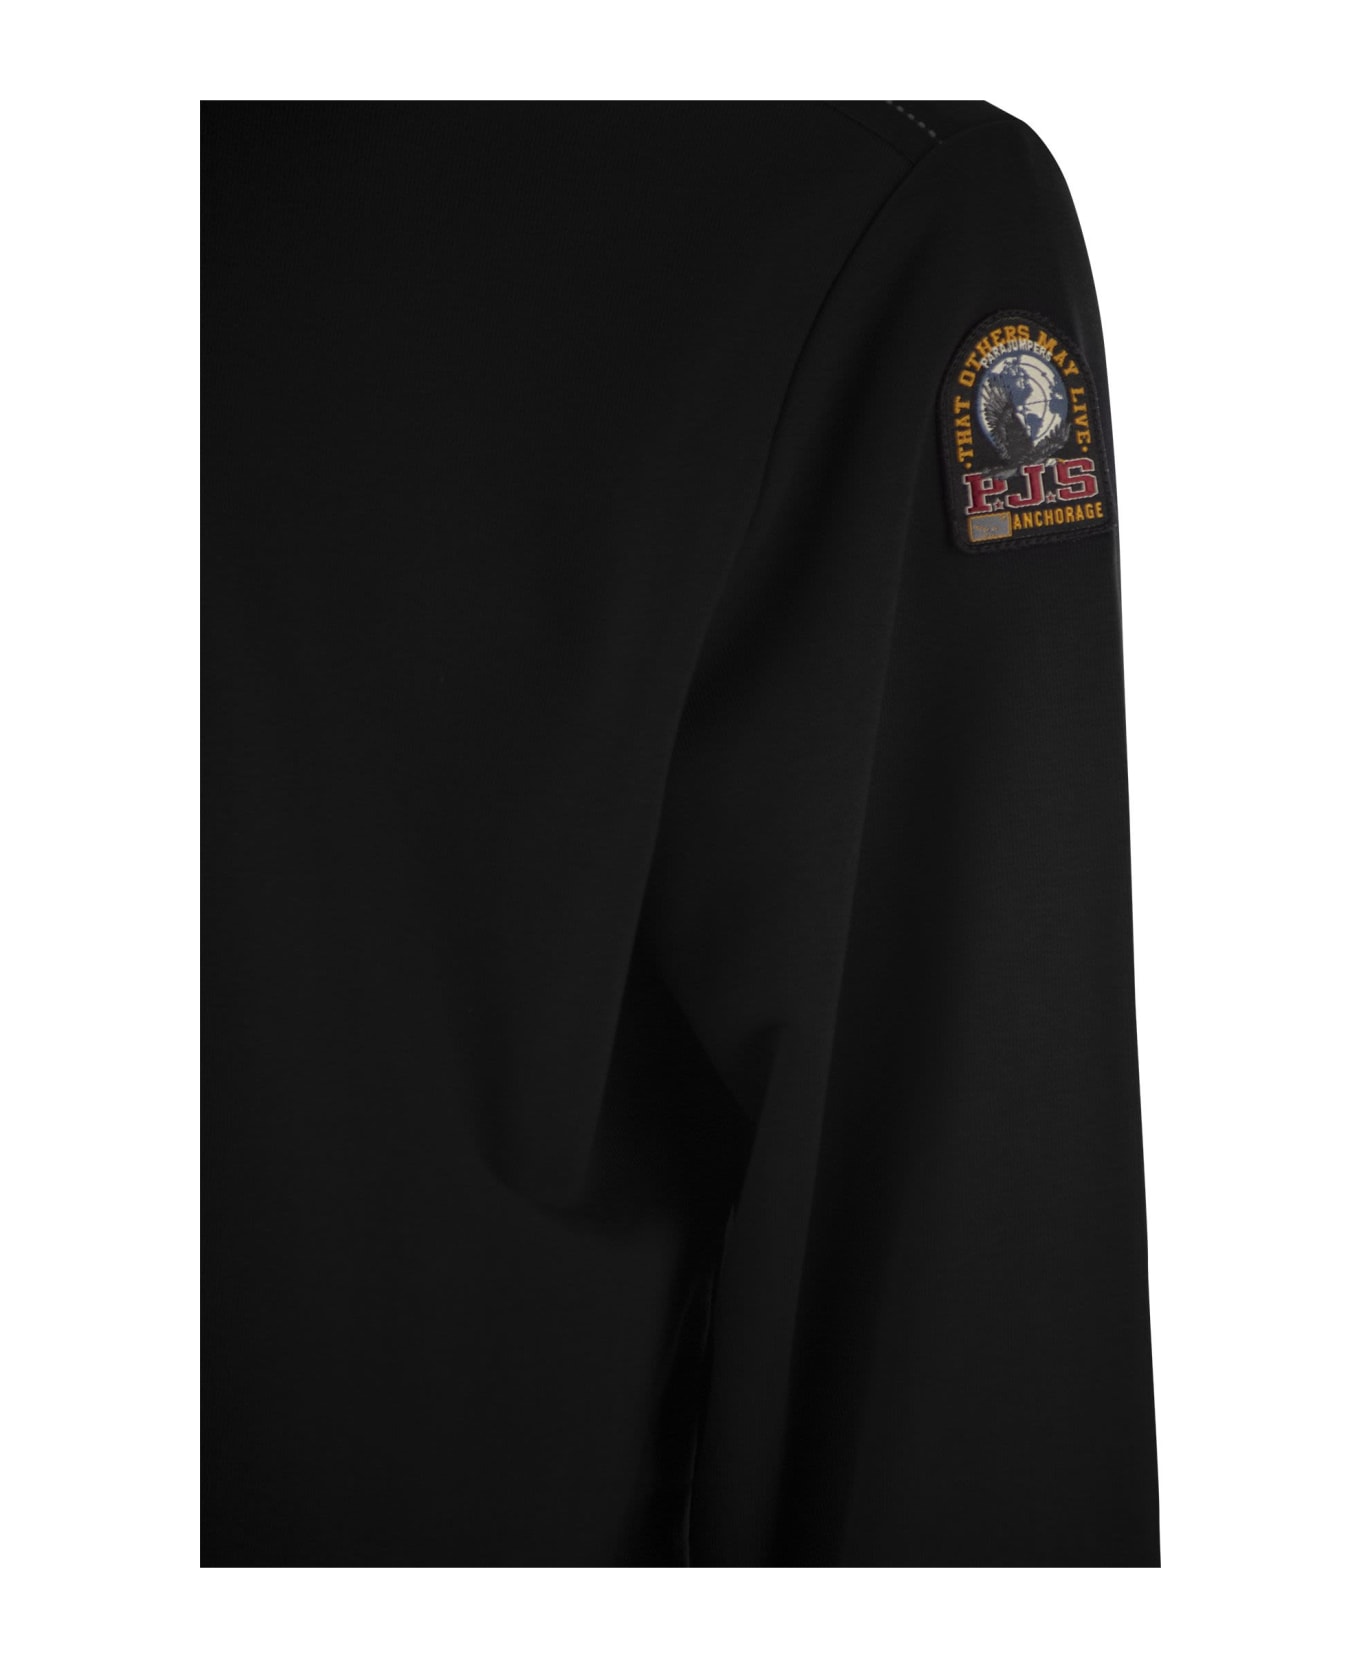 Parajumpers K2 - Cotton Crew-neck Sweatshirt - Black